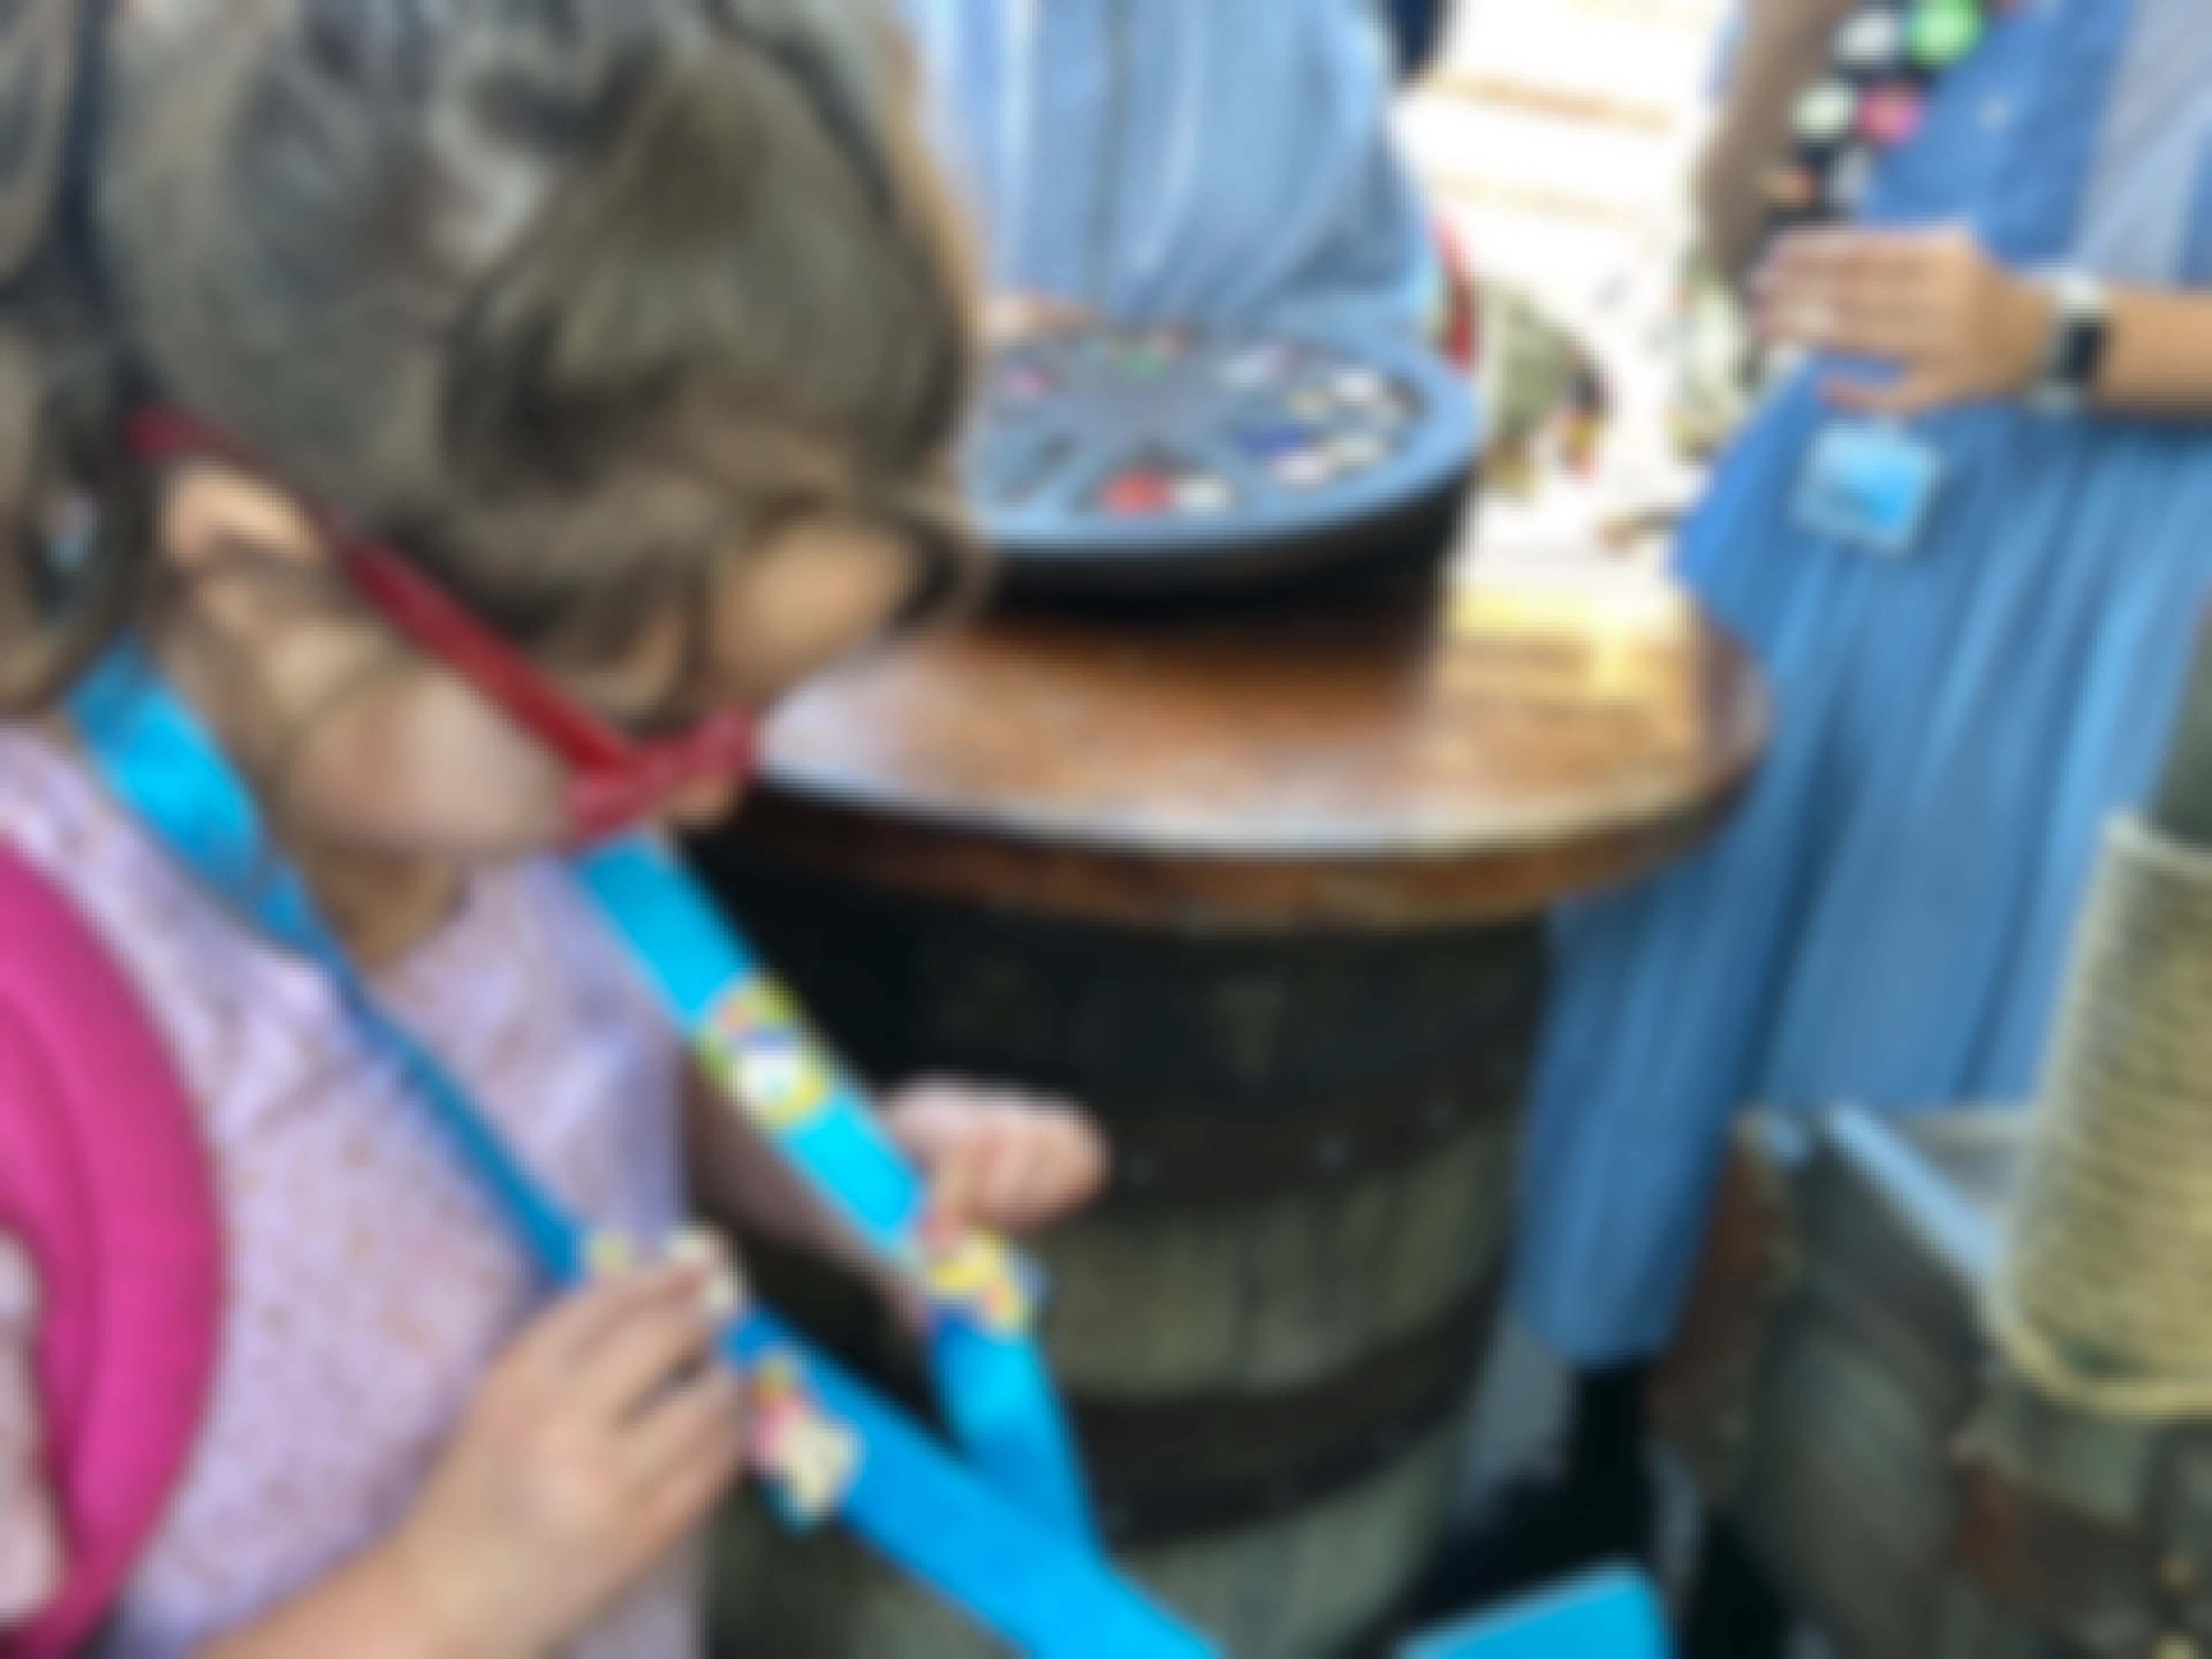 A little girl trades pins at Disneyland.